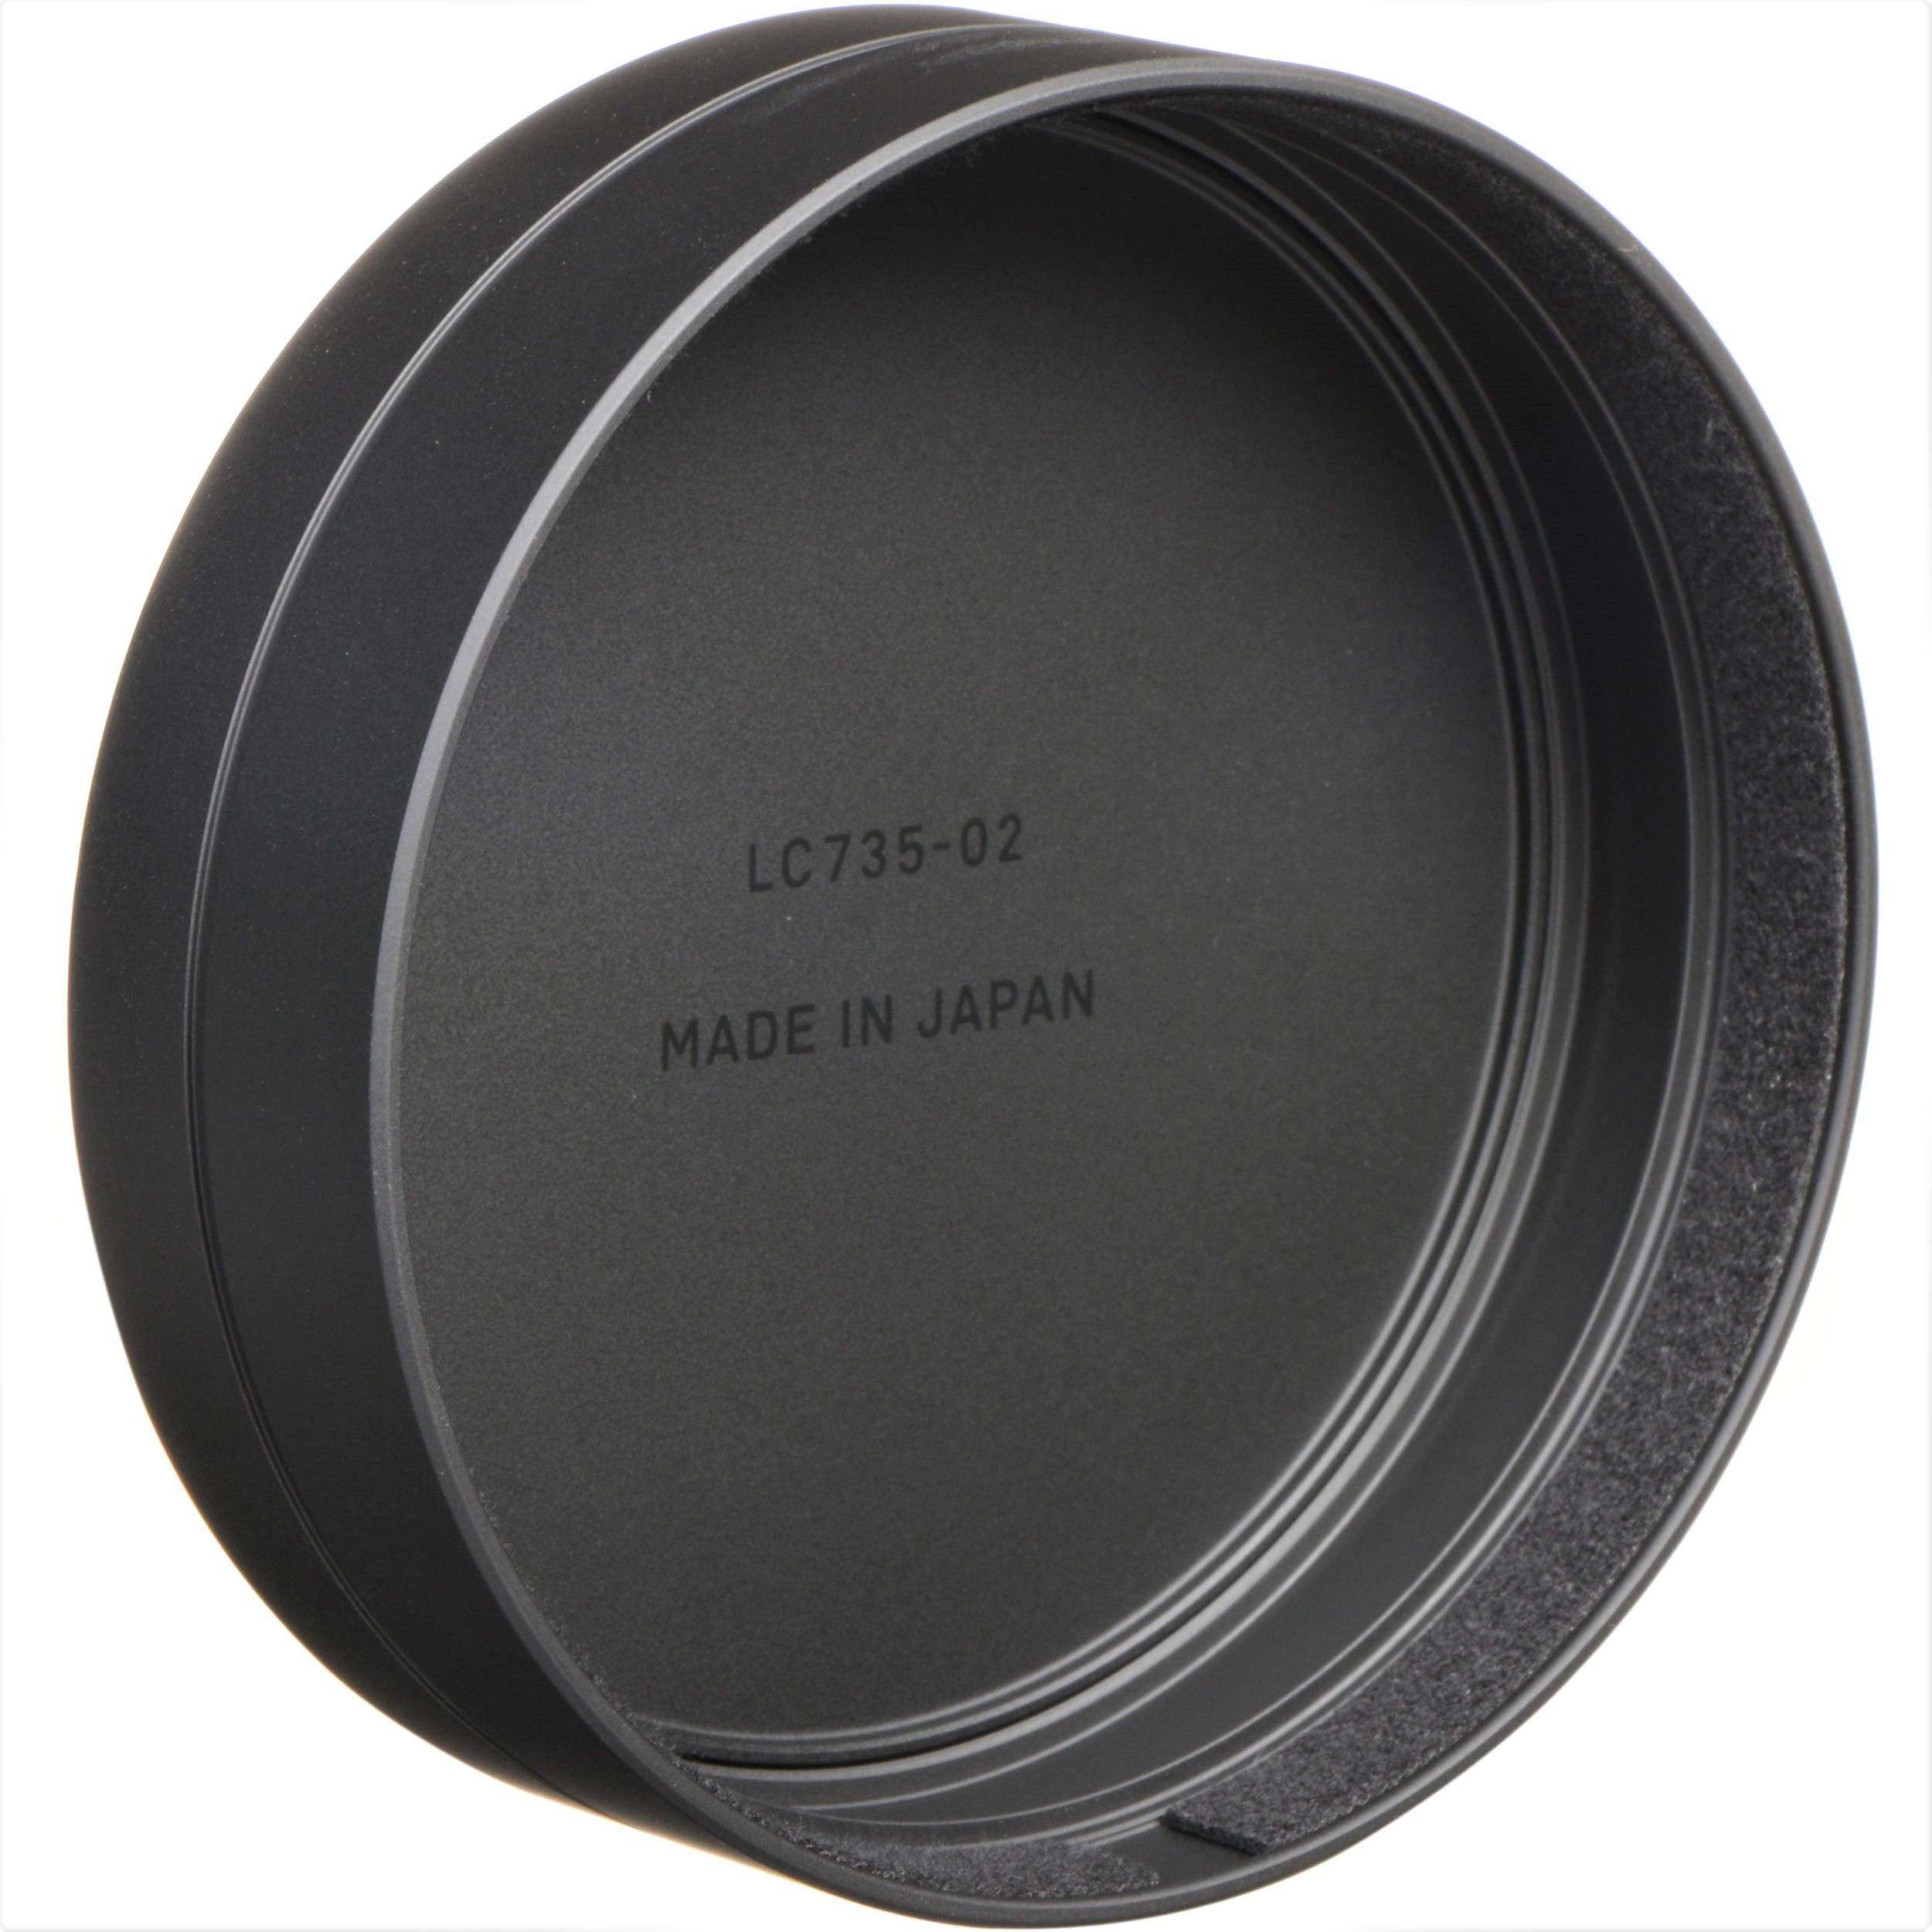 Sigma Lens Cap Cover for 8mm F3.5 EX DG Circular Fisheye Lens